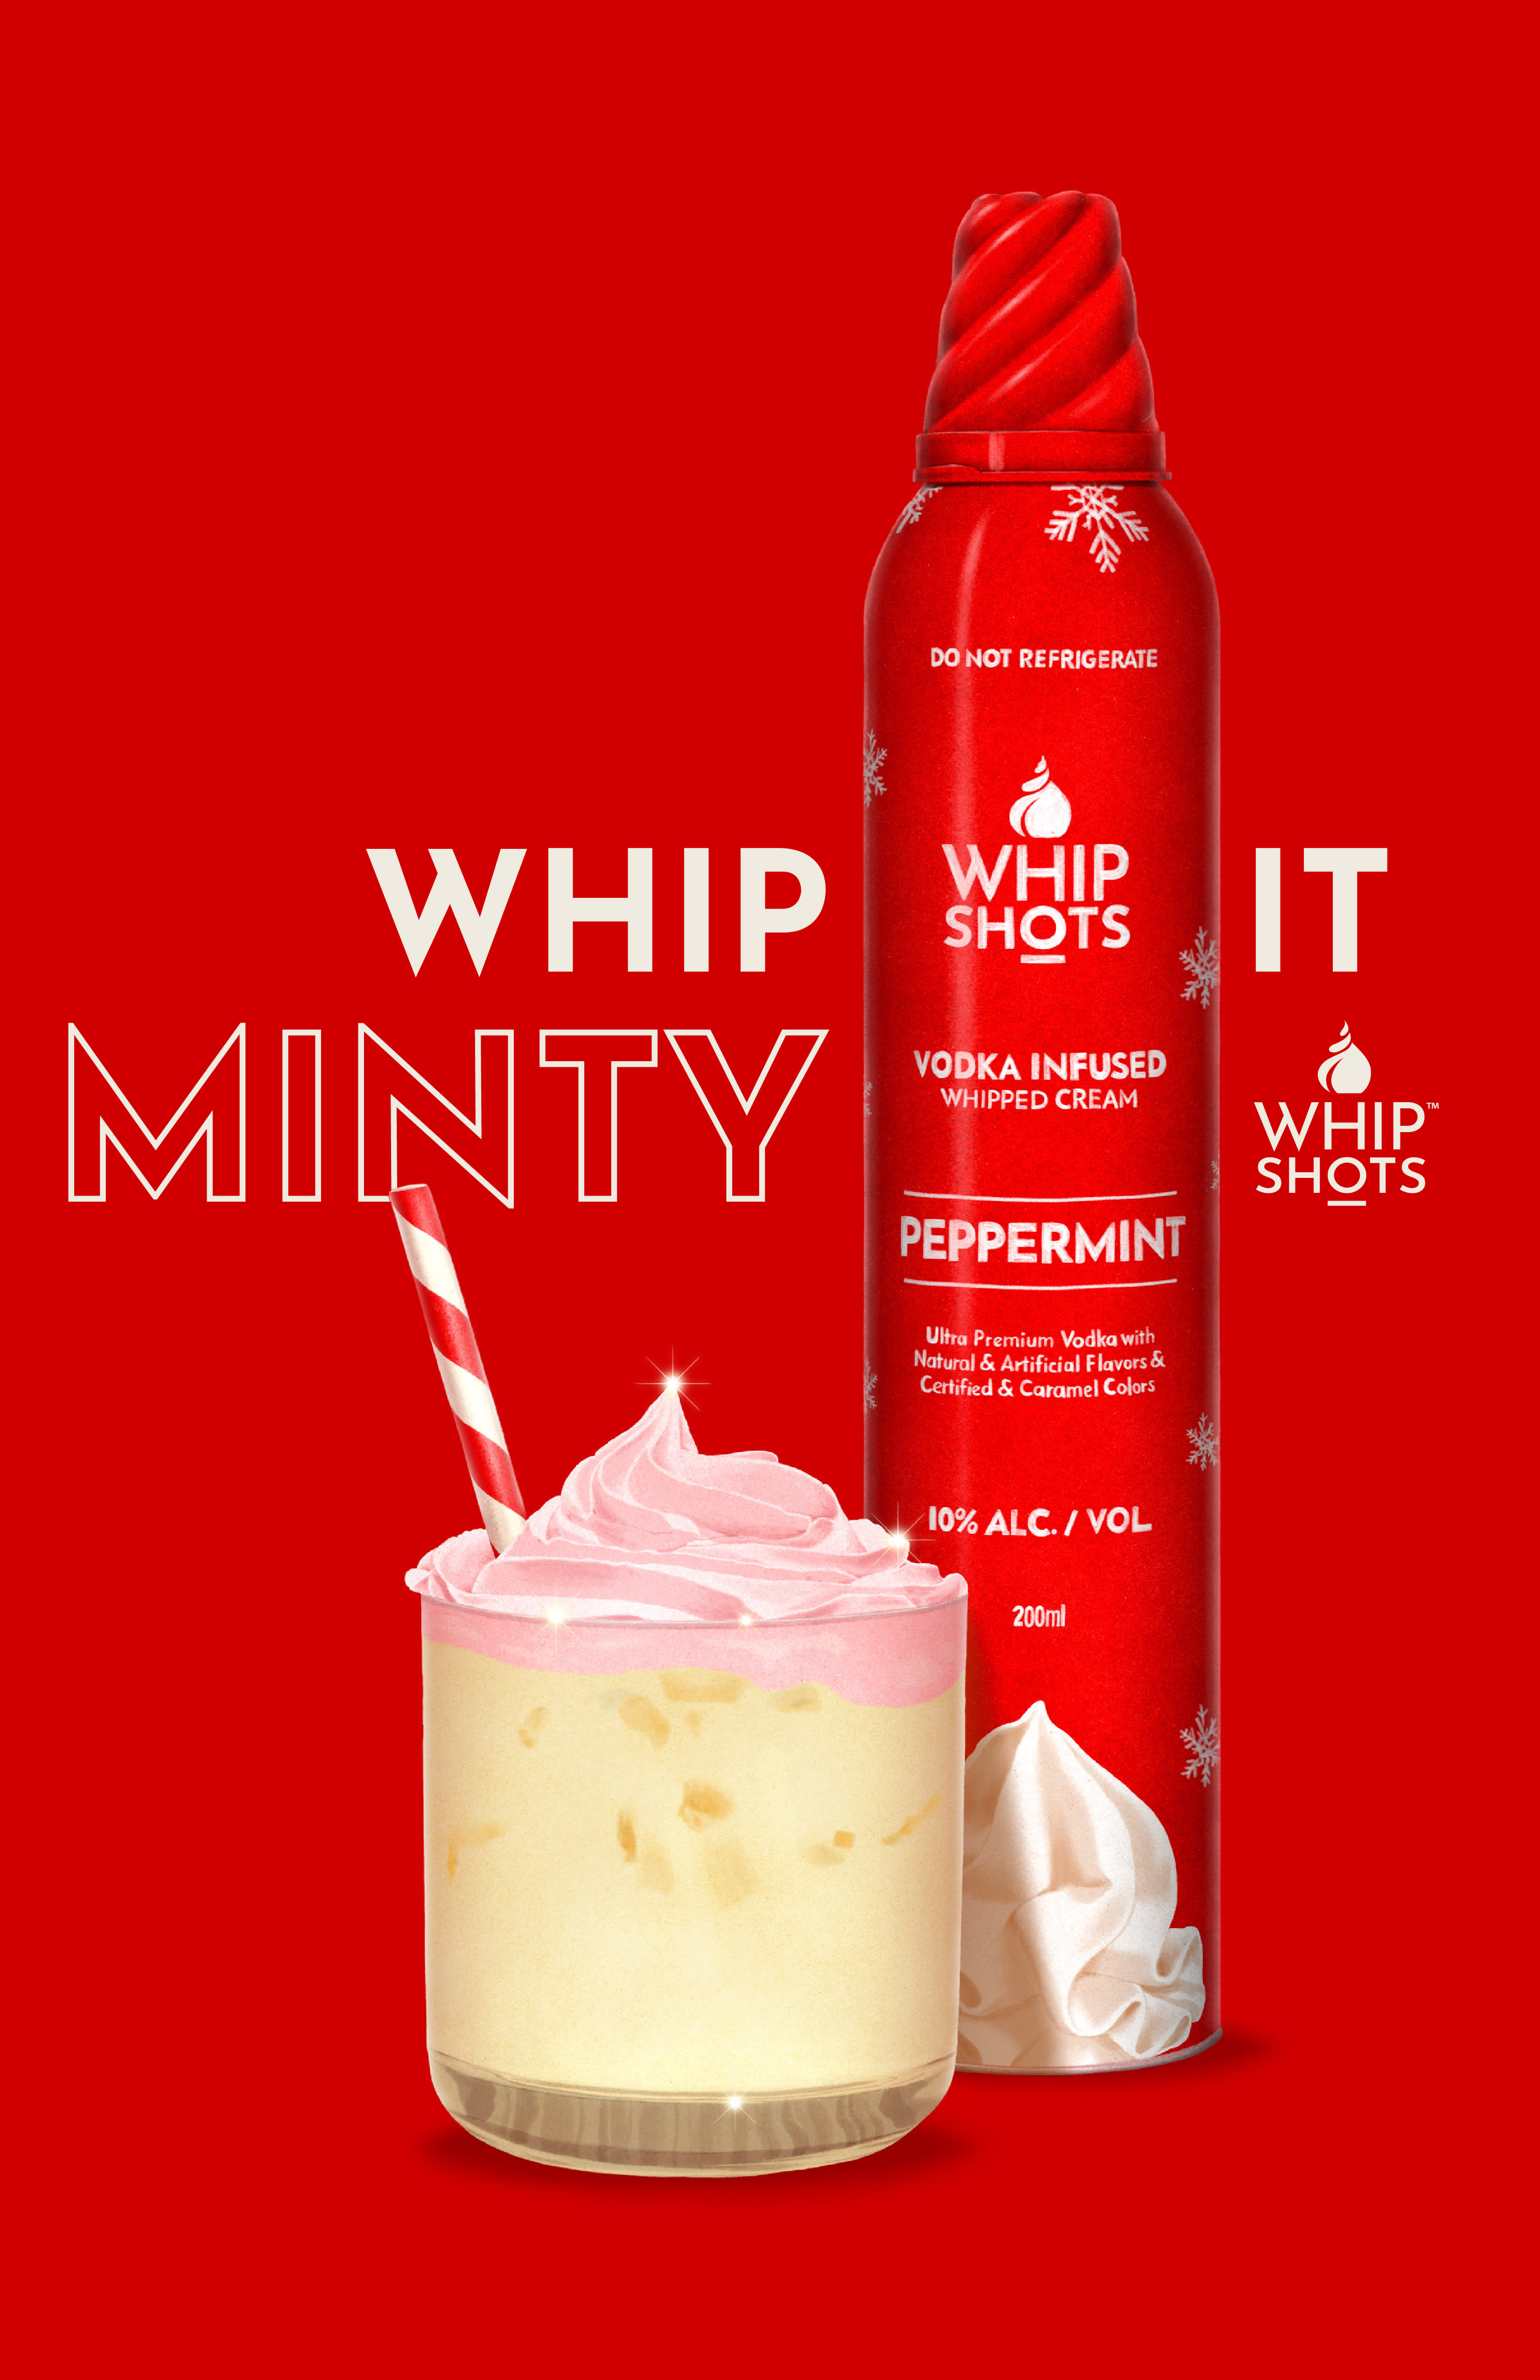 Whip Shots: Cardi B's New Boozy Venture